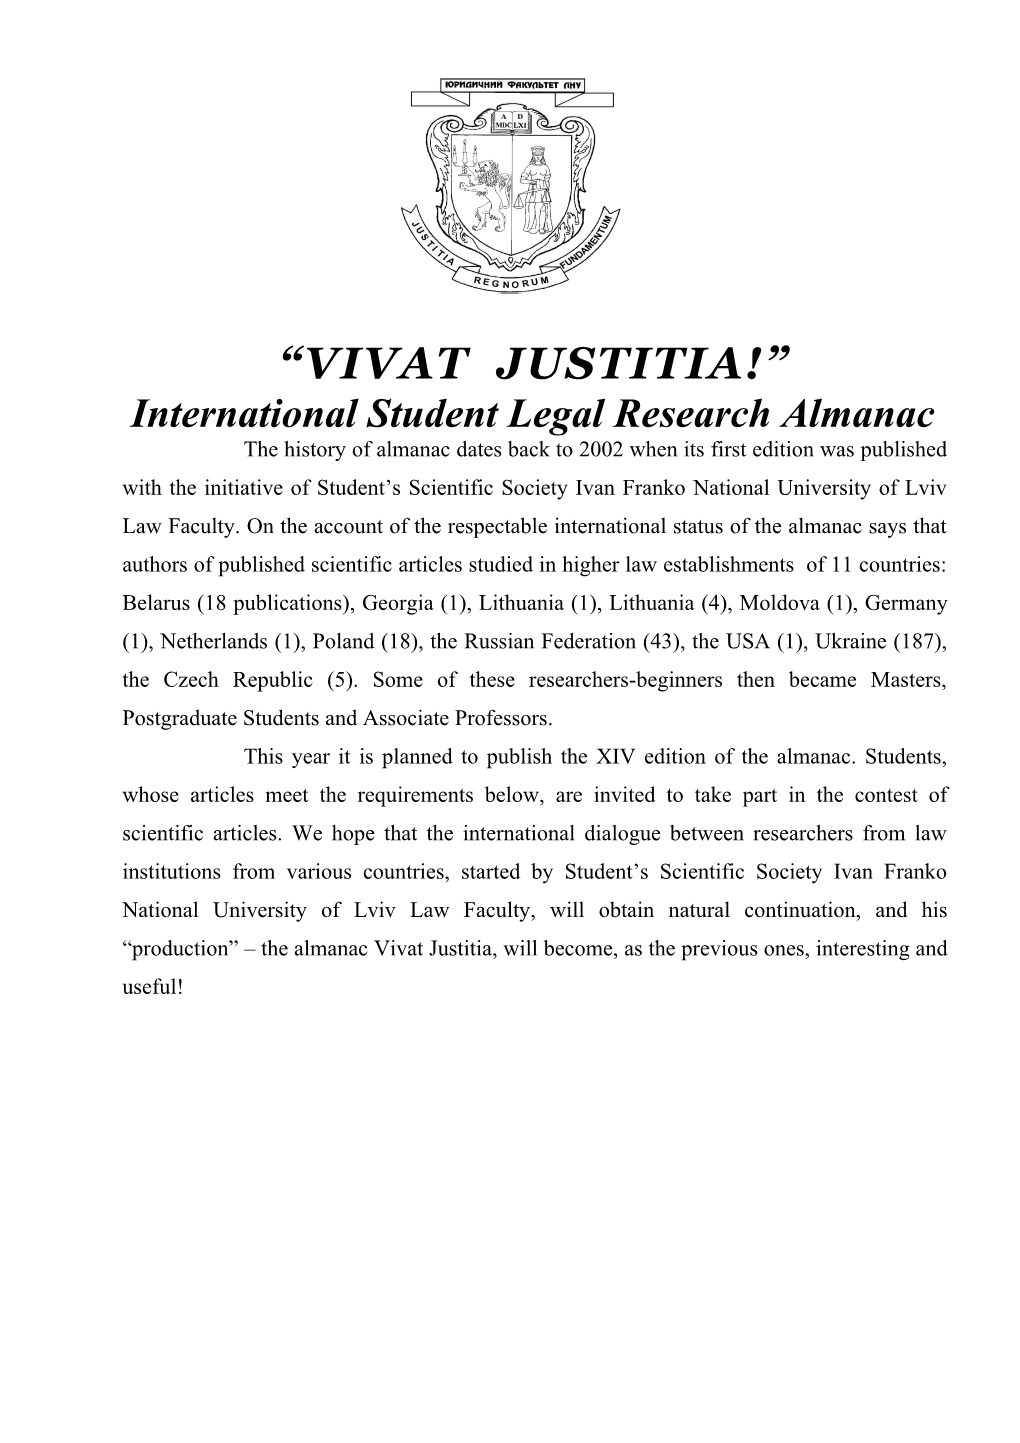 International Student Legal Research Almanac